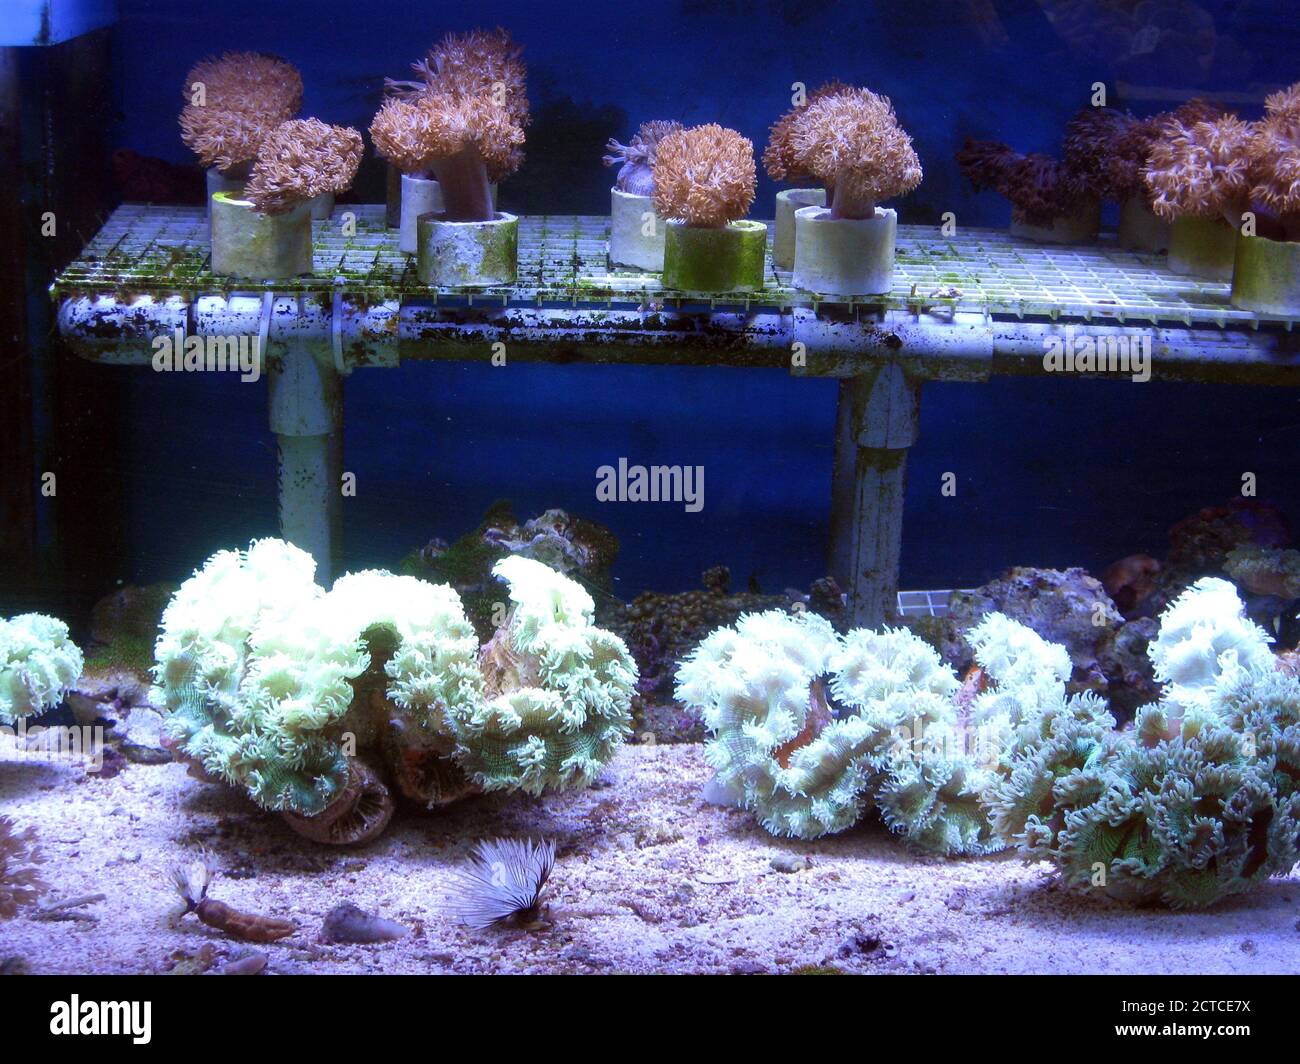 Stony corals (scleractinia) for sale in aquarium shop Stock Photo